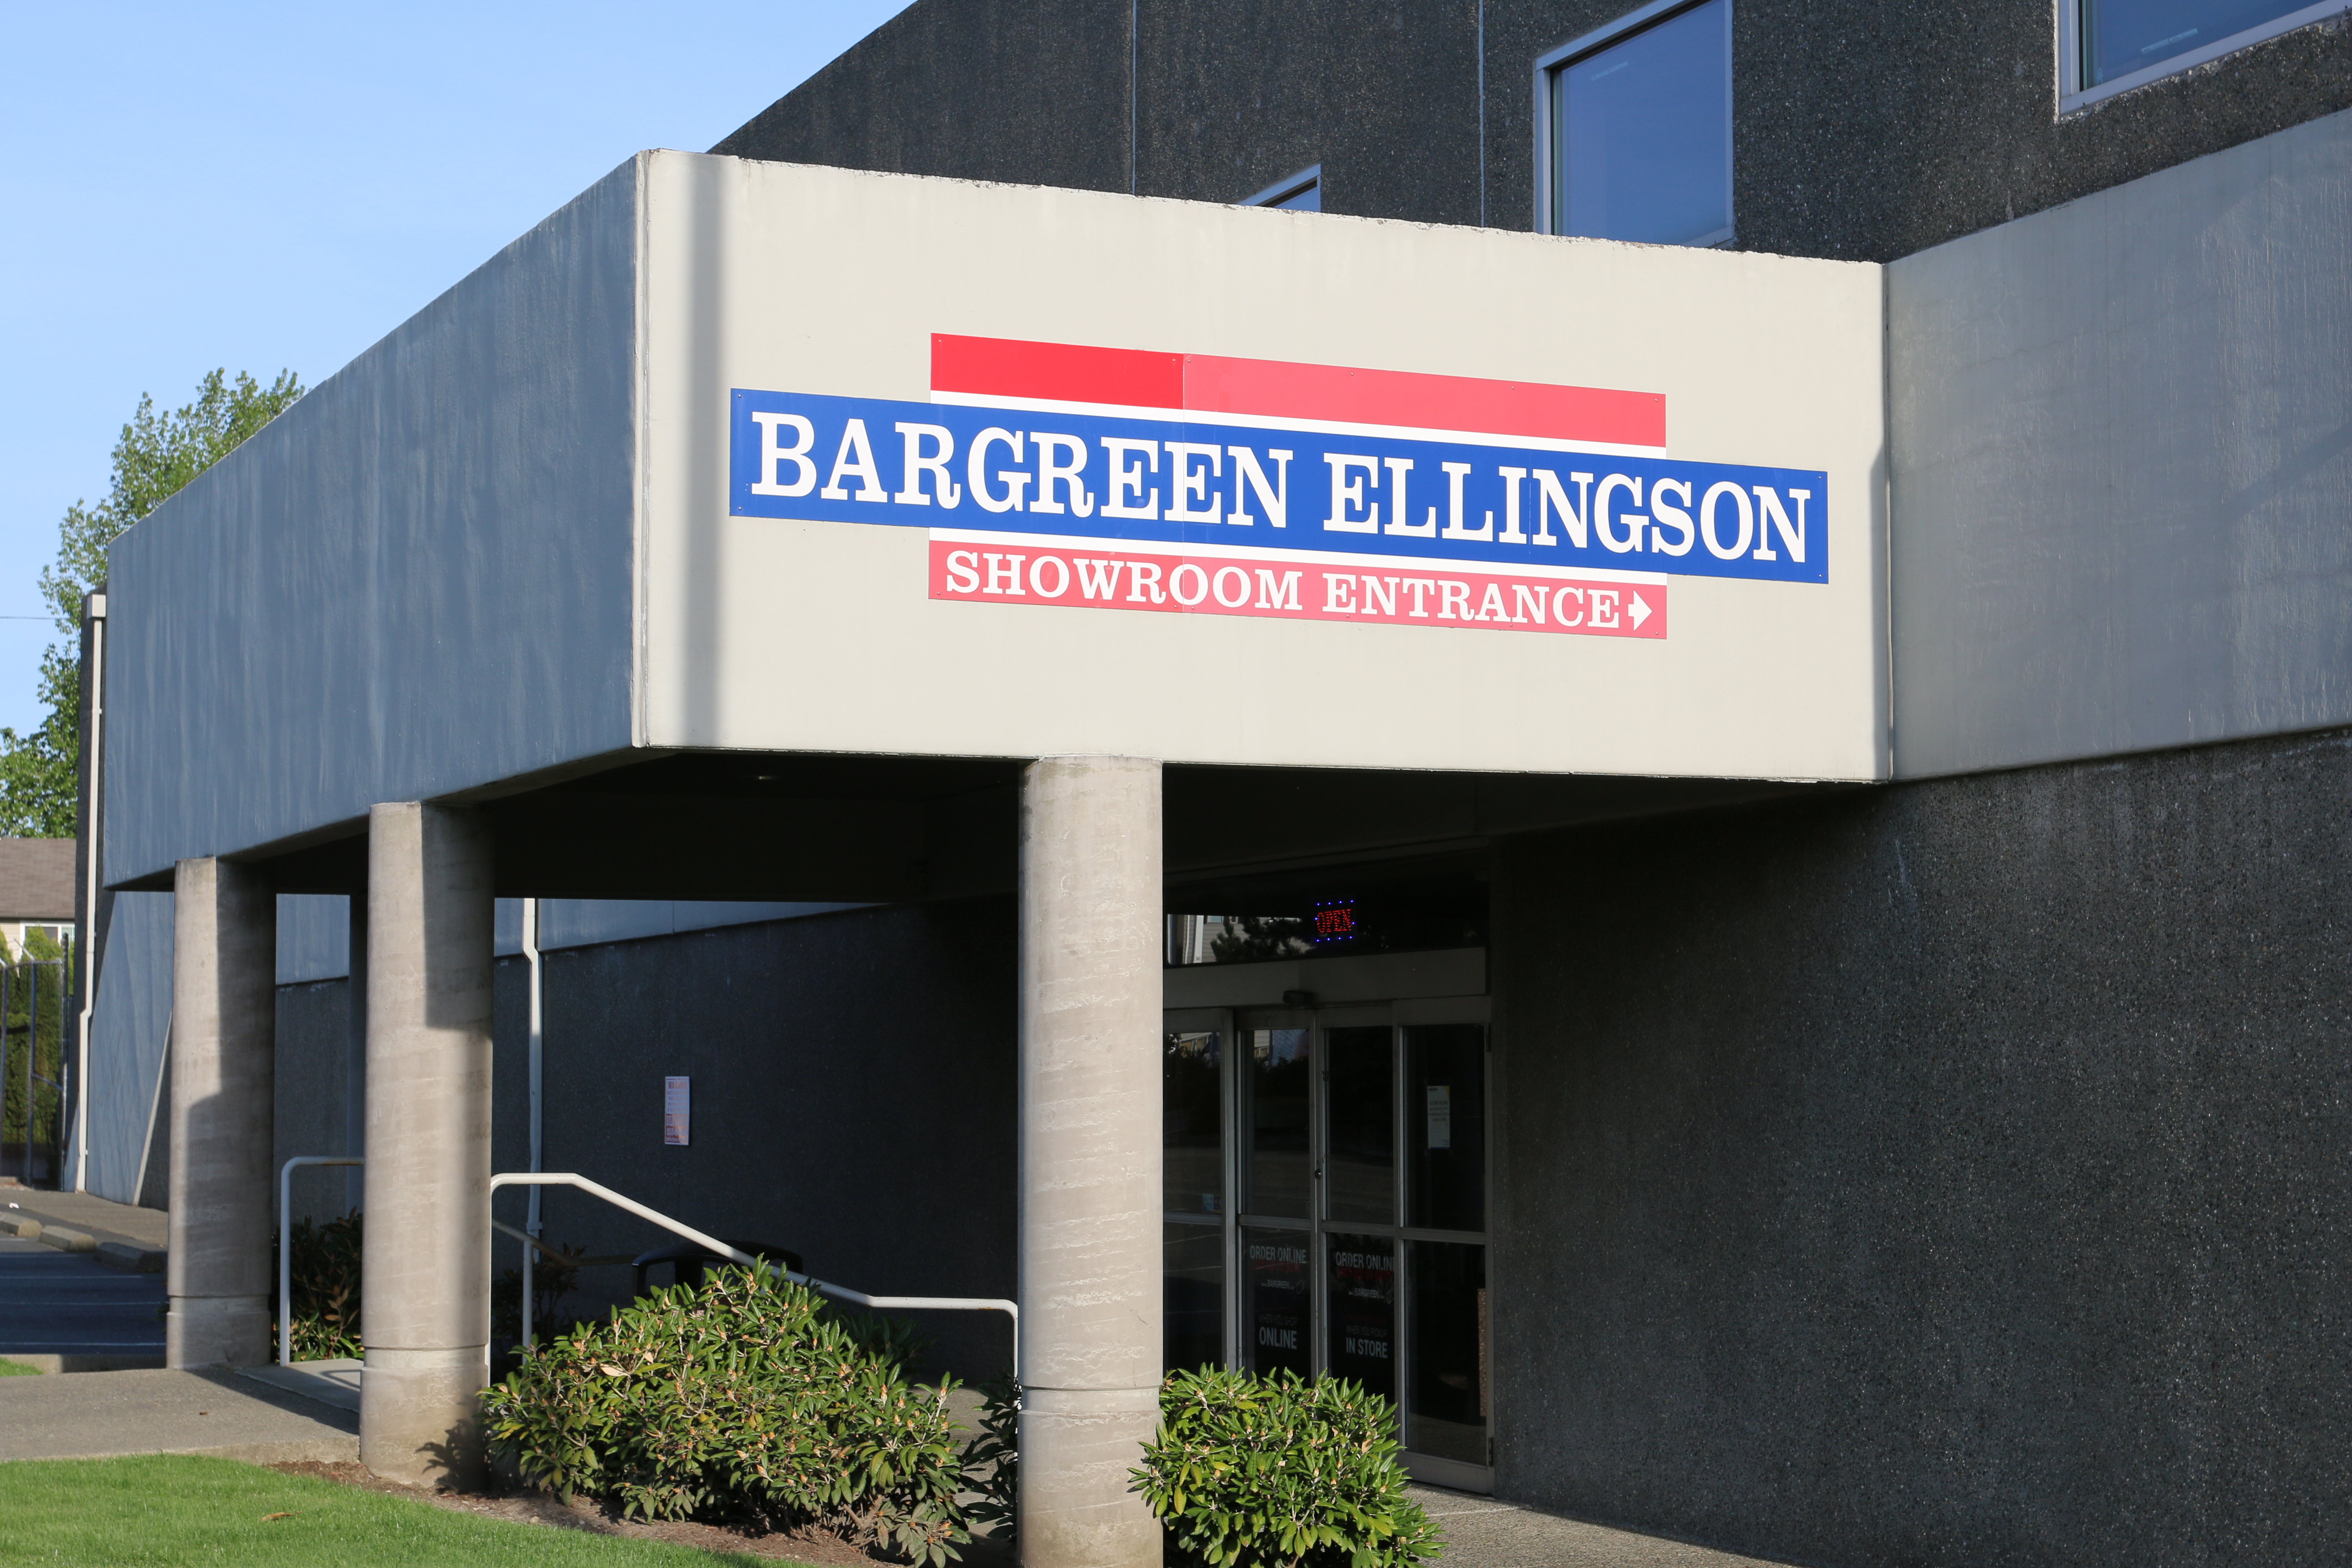 Bargreen Ellingson Restaurant Supply and Design | 6626 Tacoma Mall Blvd Ste B, Tacoma, WA, 98409 | +1 (800) 322-4441